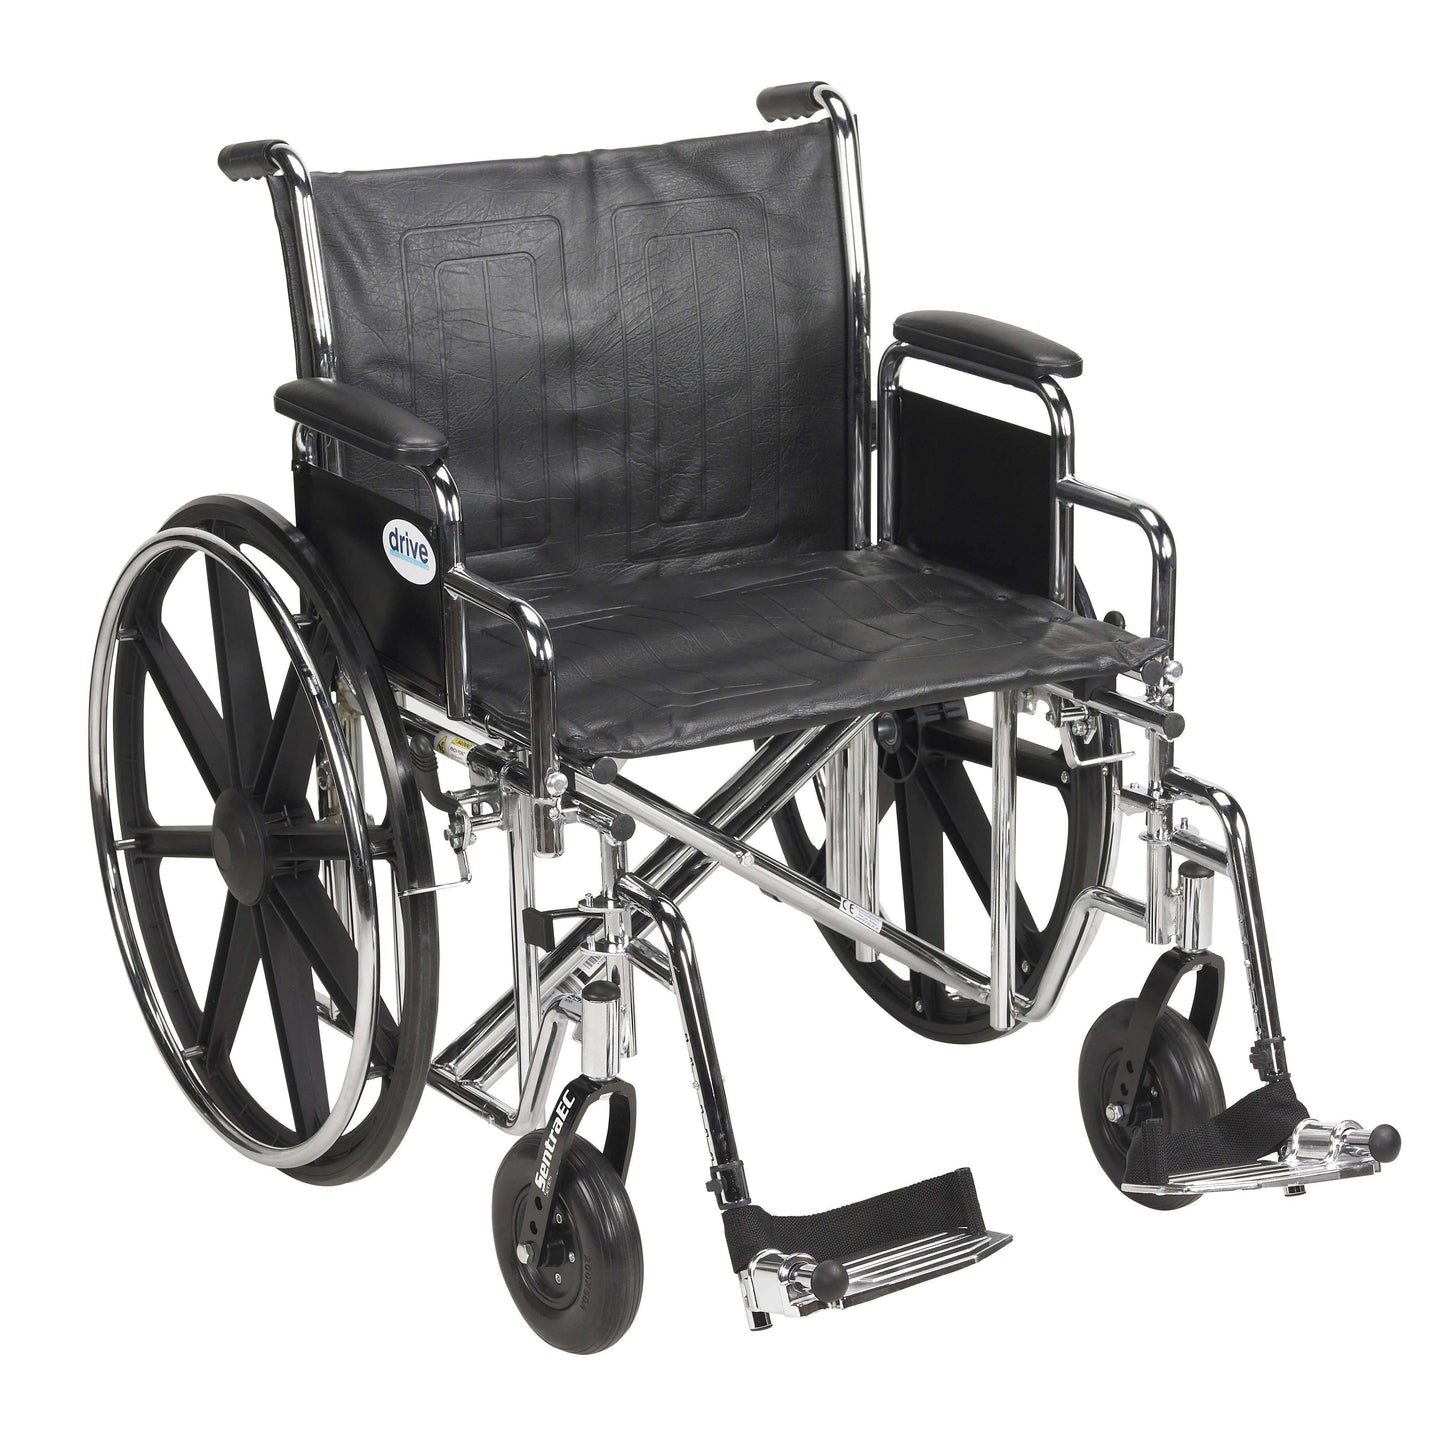 Drive std22ecdda-sf Sentra EC Heavy Duty Wheelchair, Detachable Desk Arms, Swing away Footrests, 22" Seat